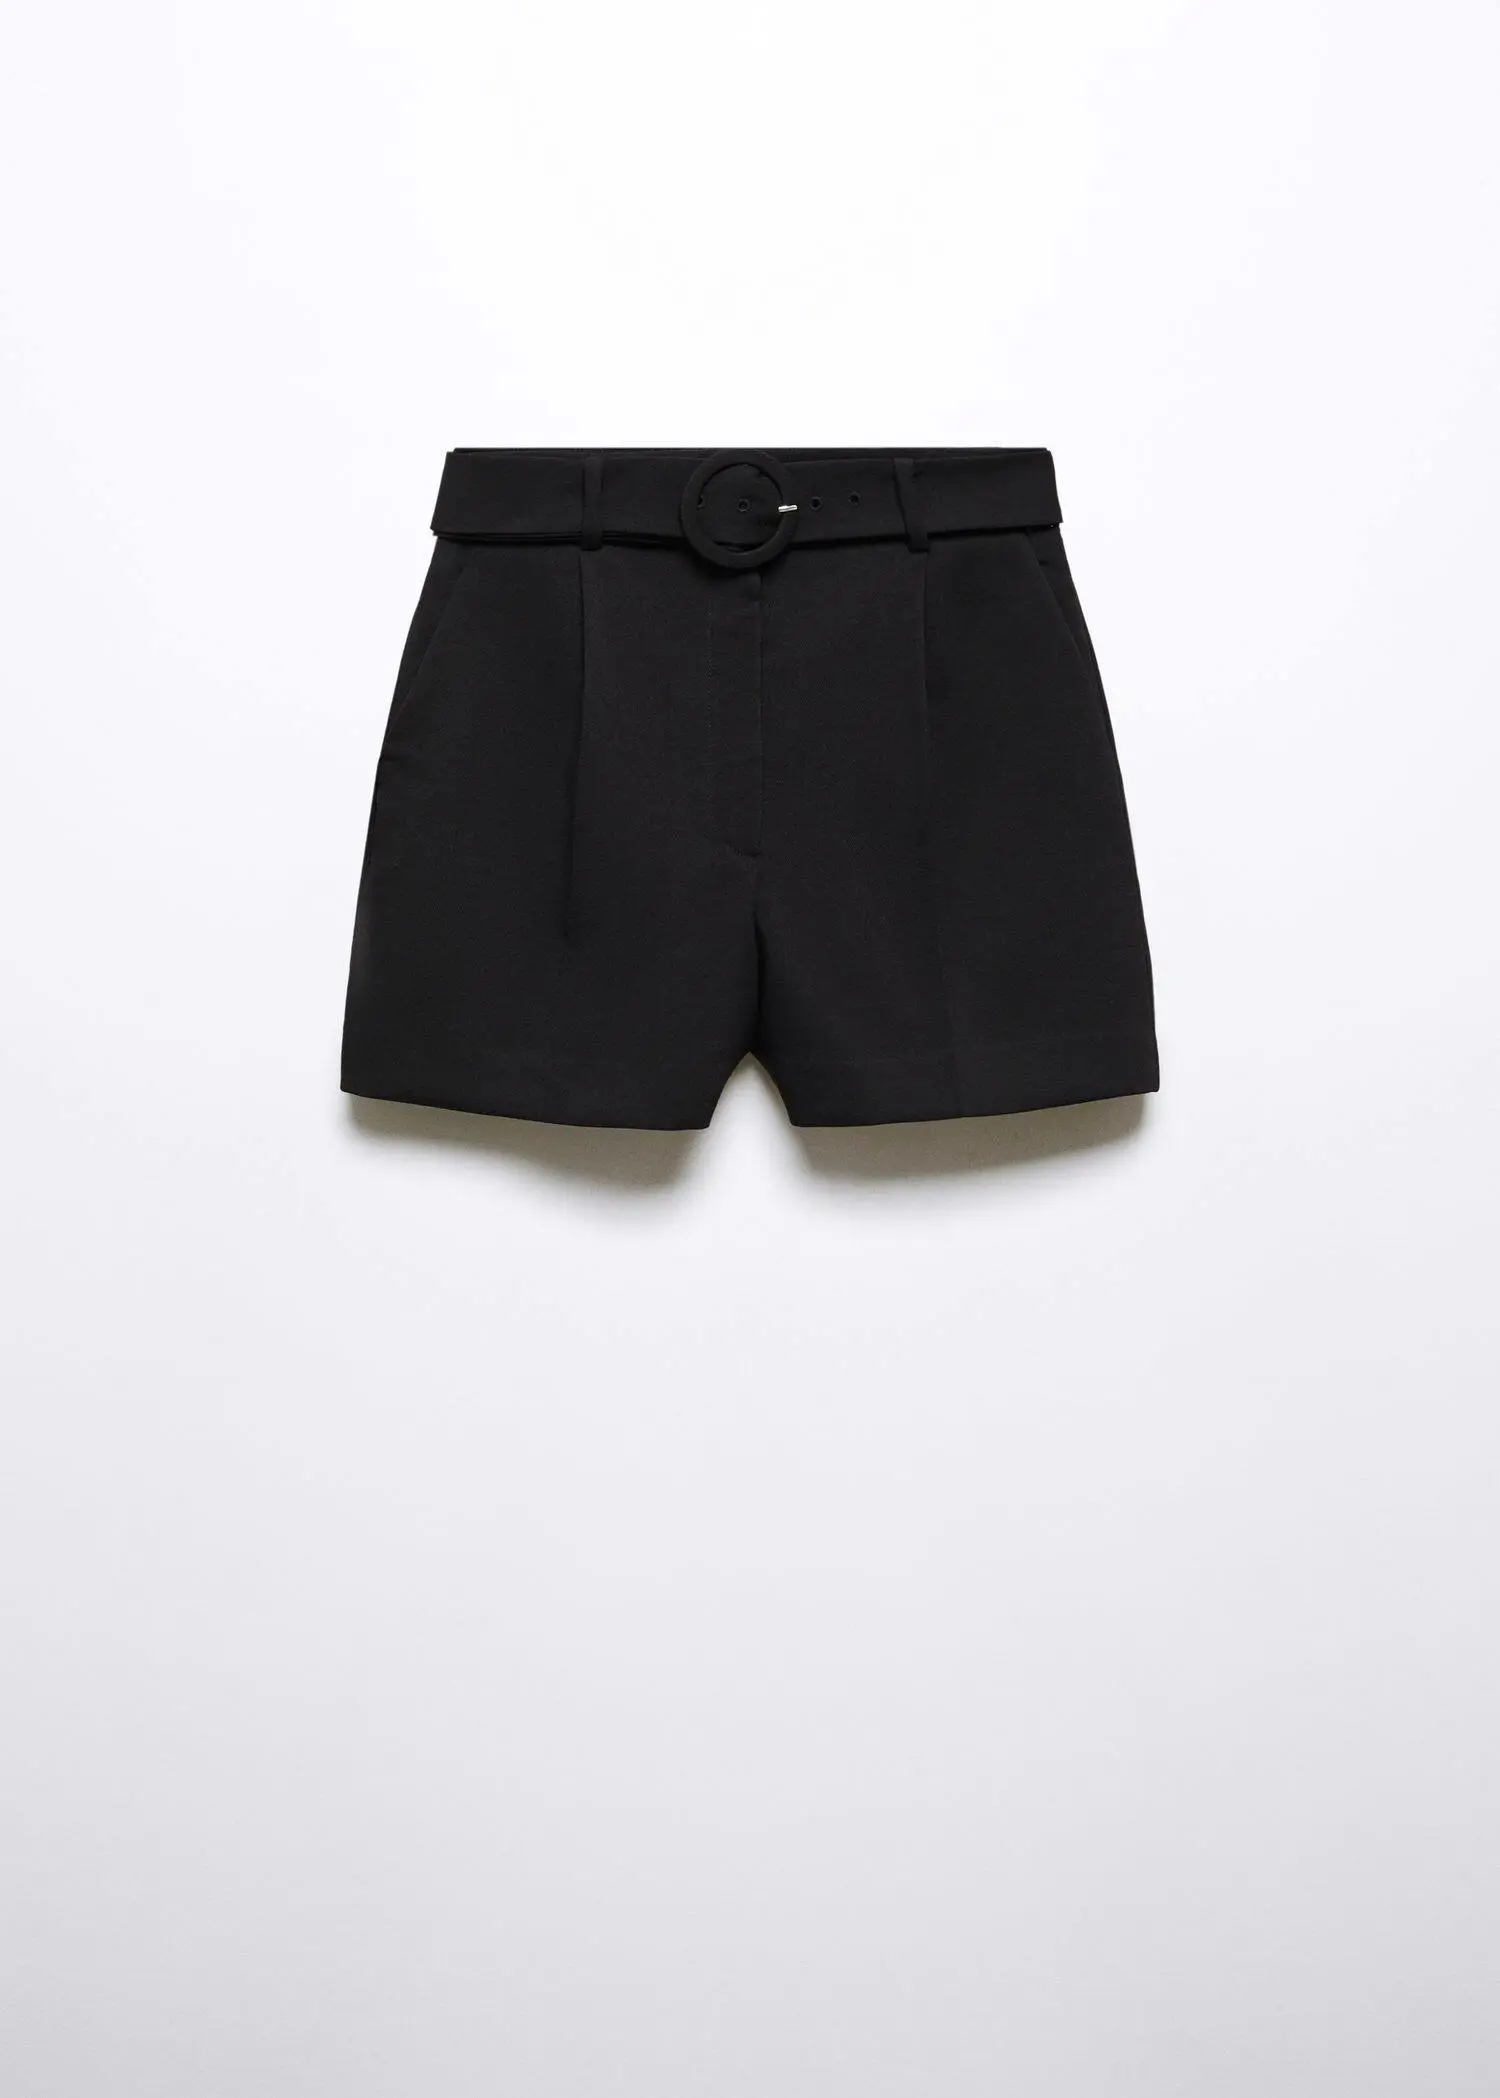 Mango Paperbag shorts with belt. 3